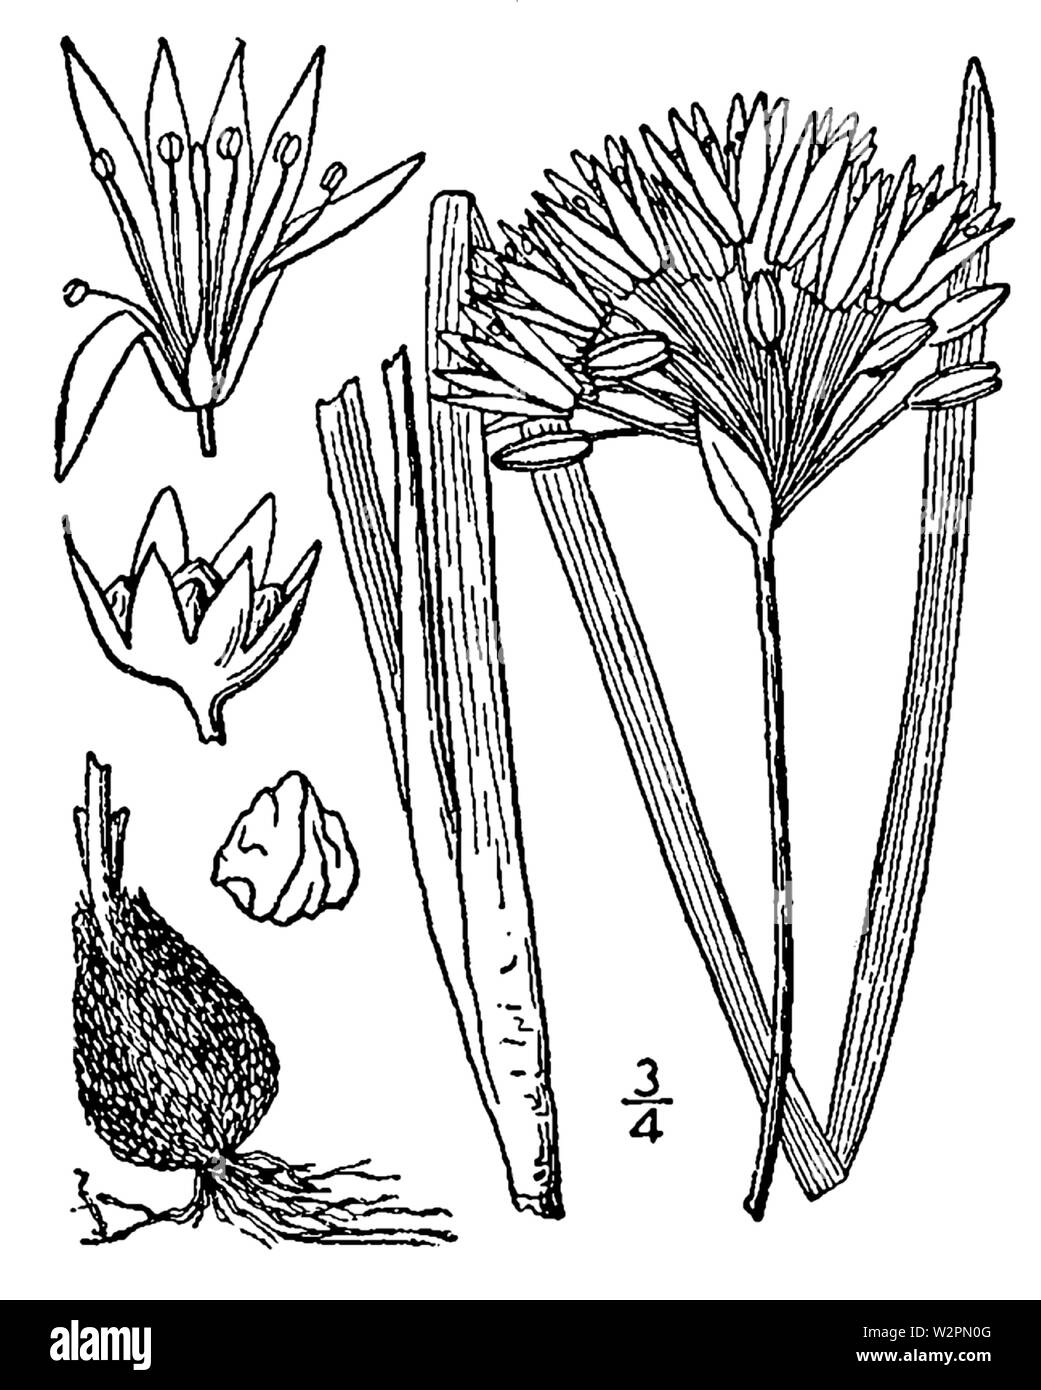 Allium canadense mobilense drawing Stock Photo